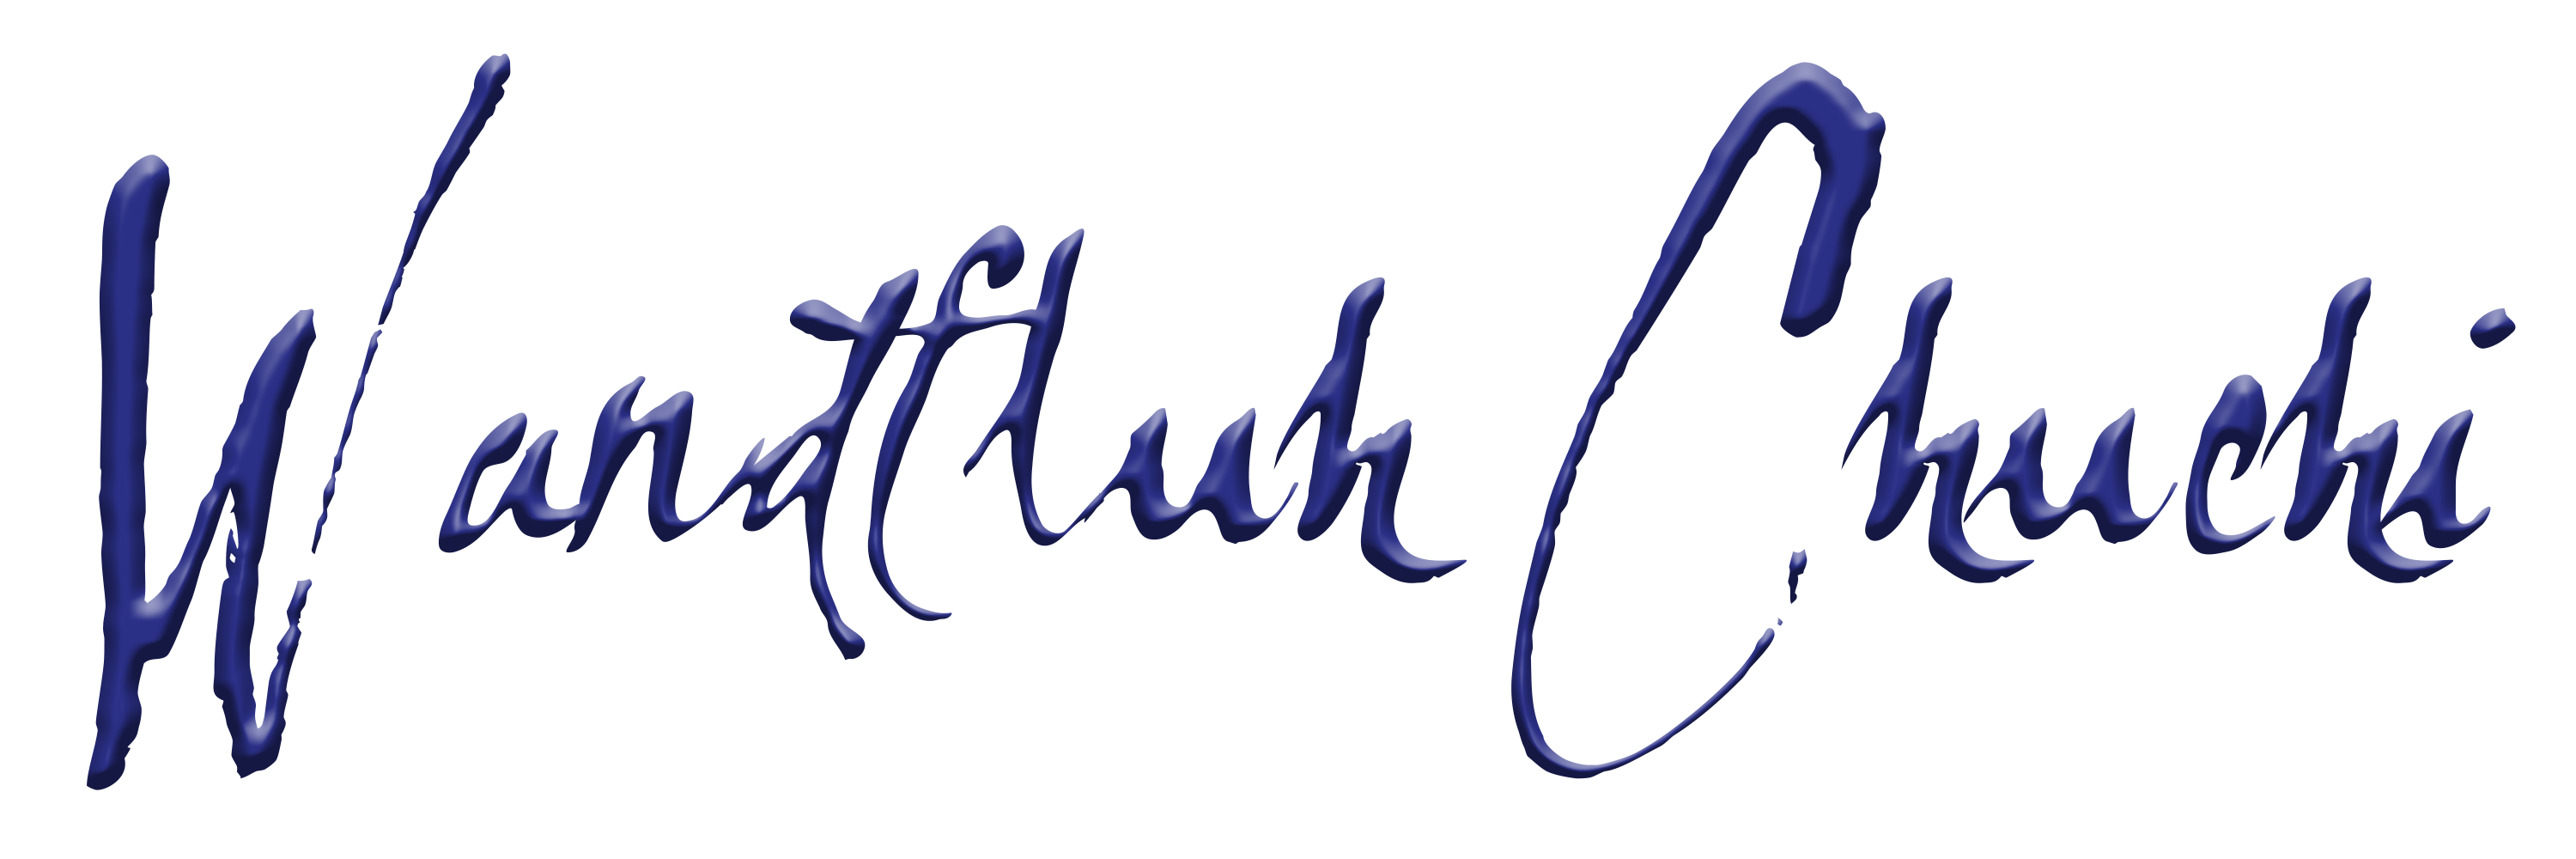 Wandfluh Chuchi logo